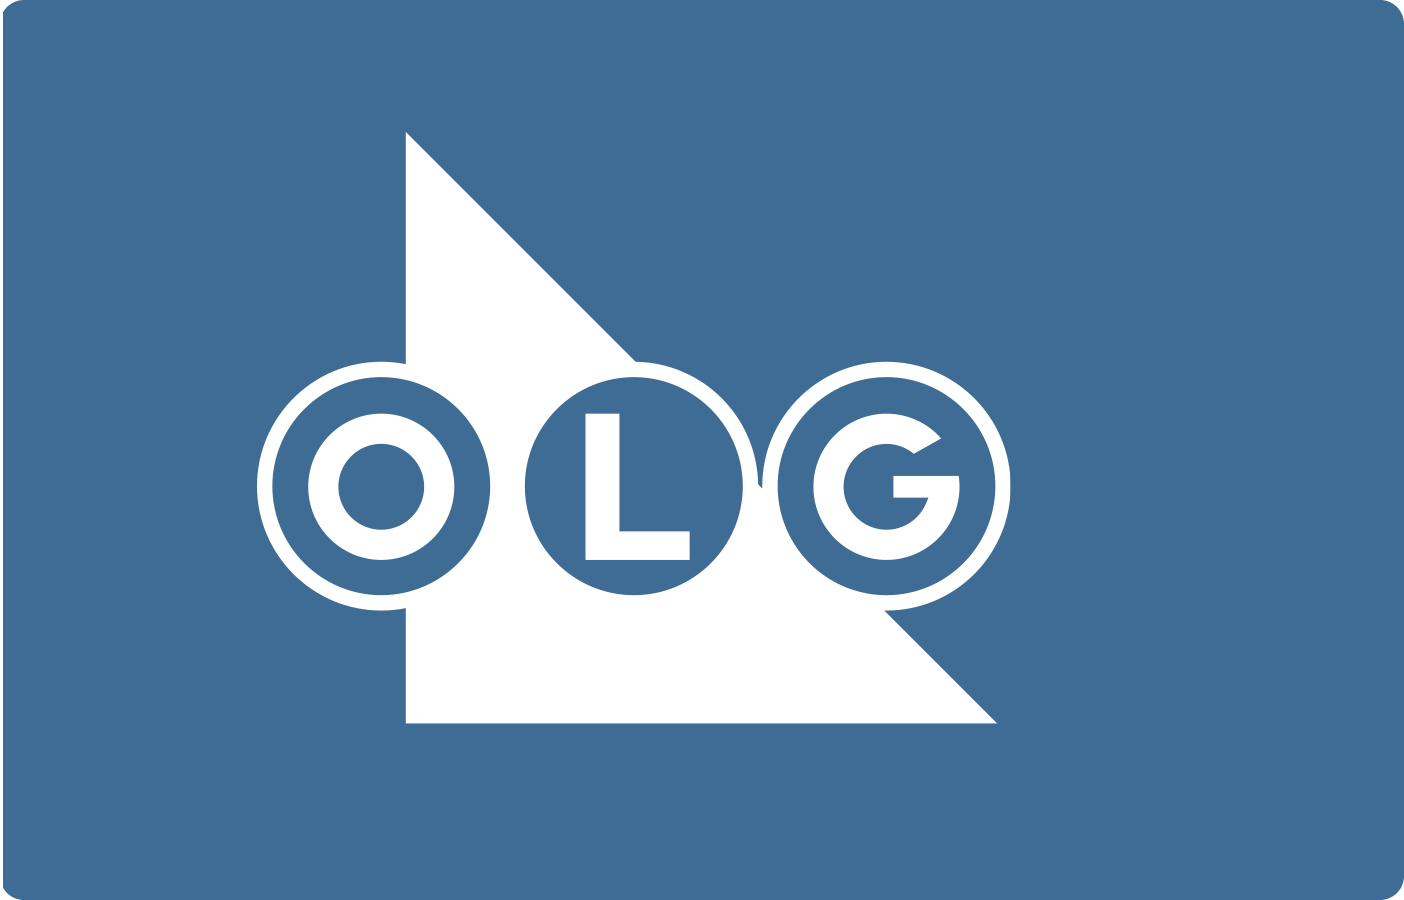 OLG logo